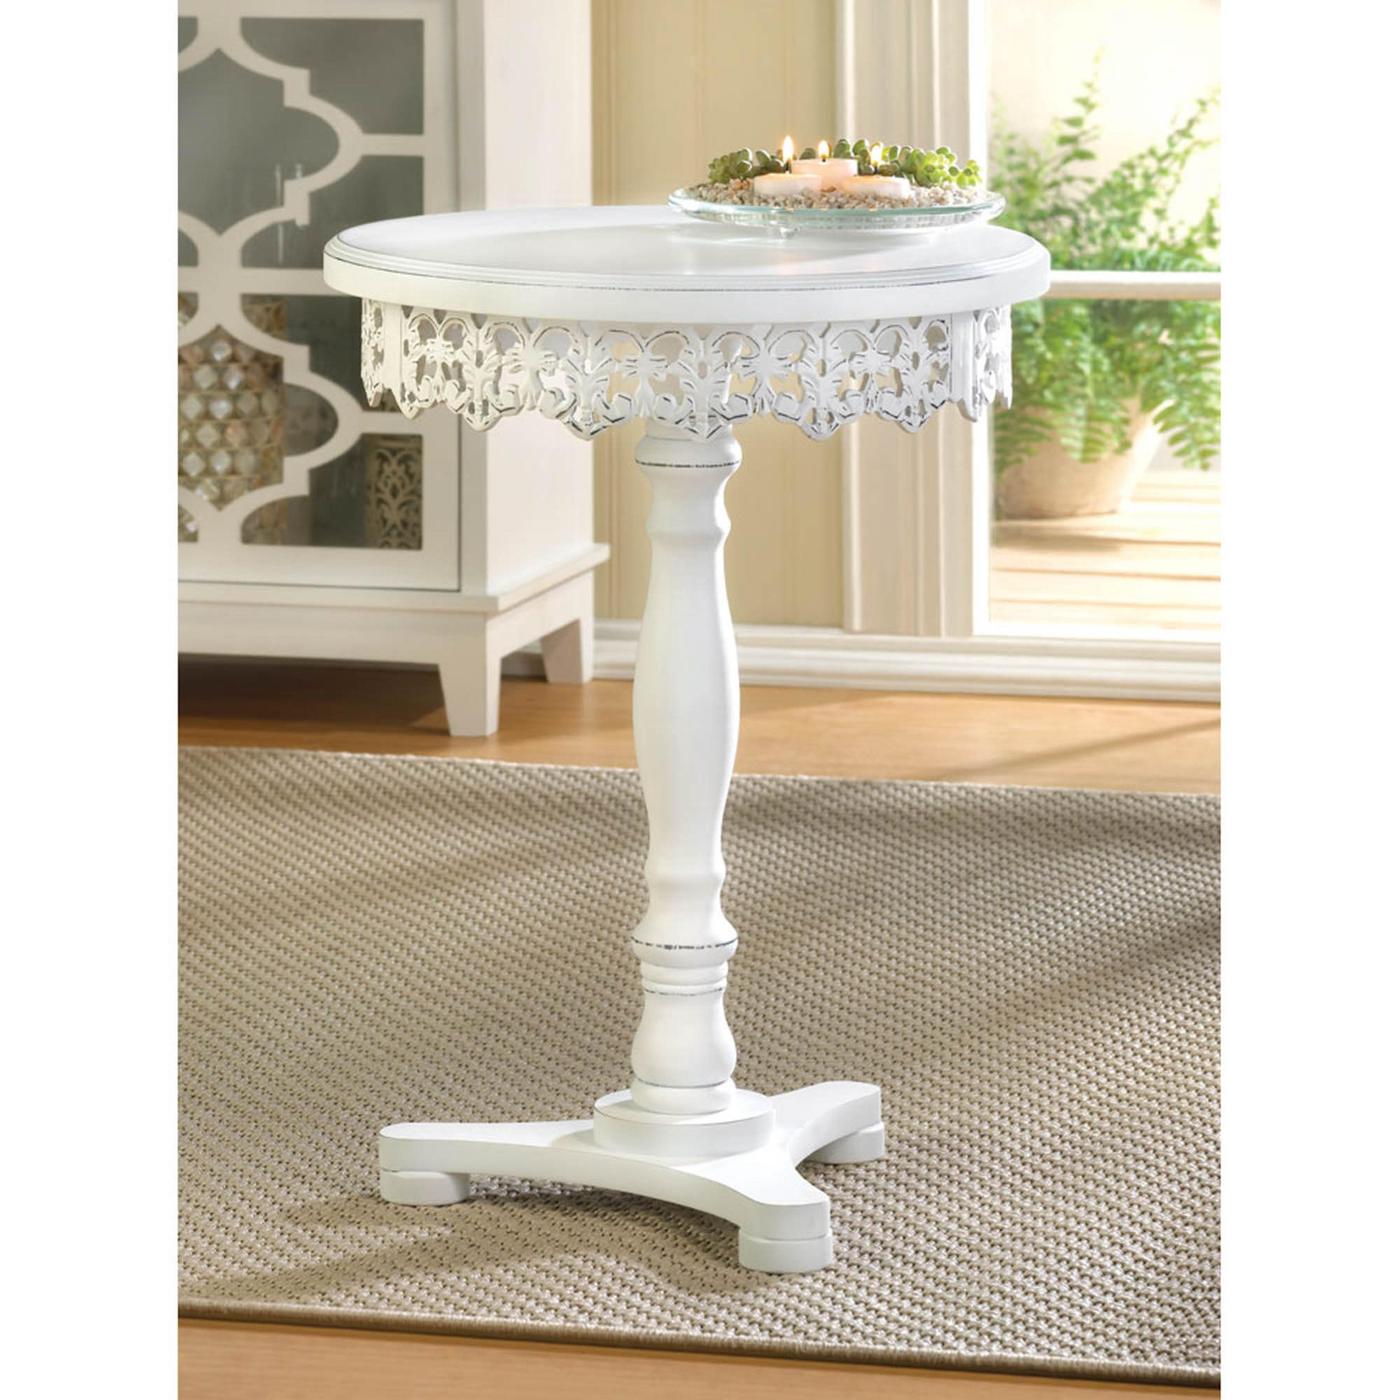 Classy Flourish Pedestal Table